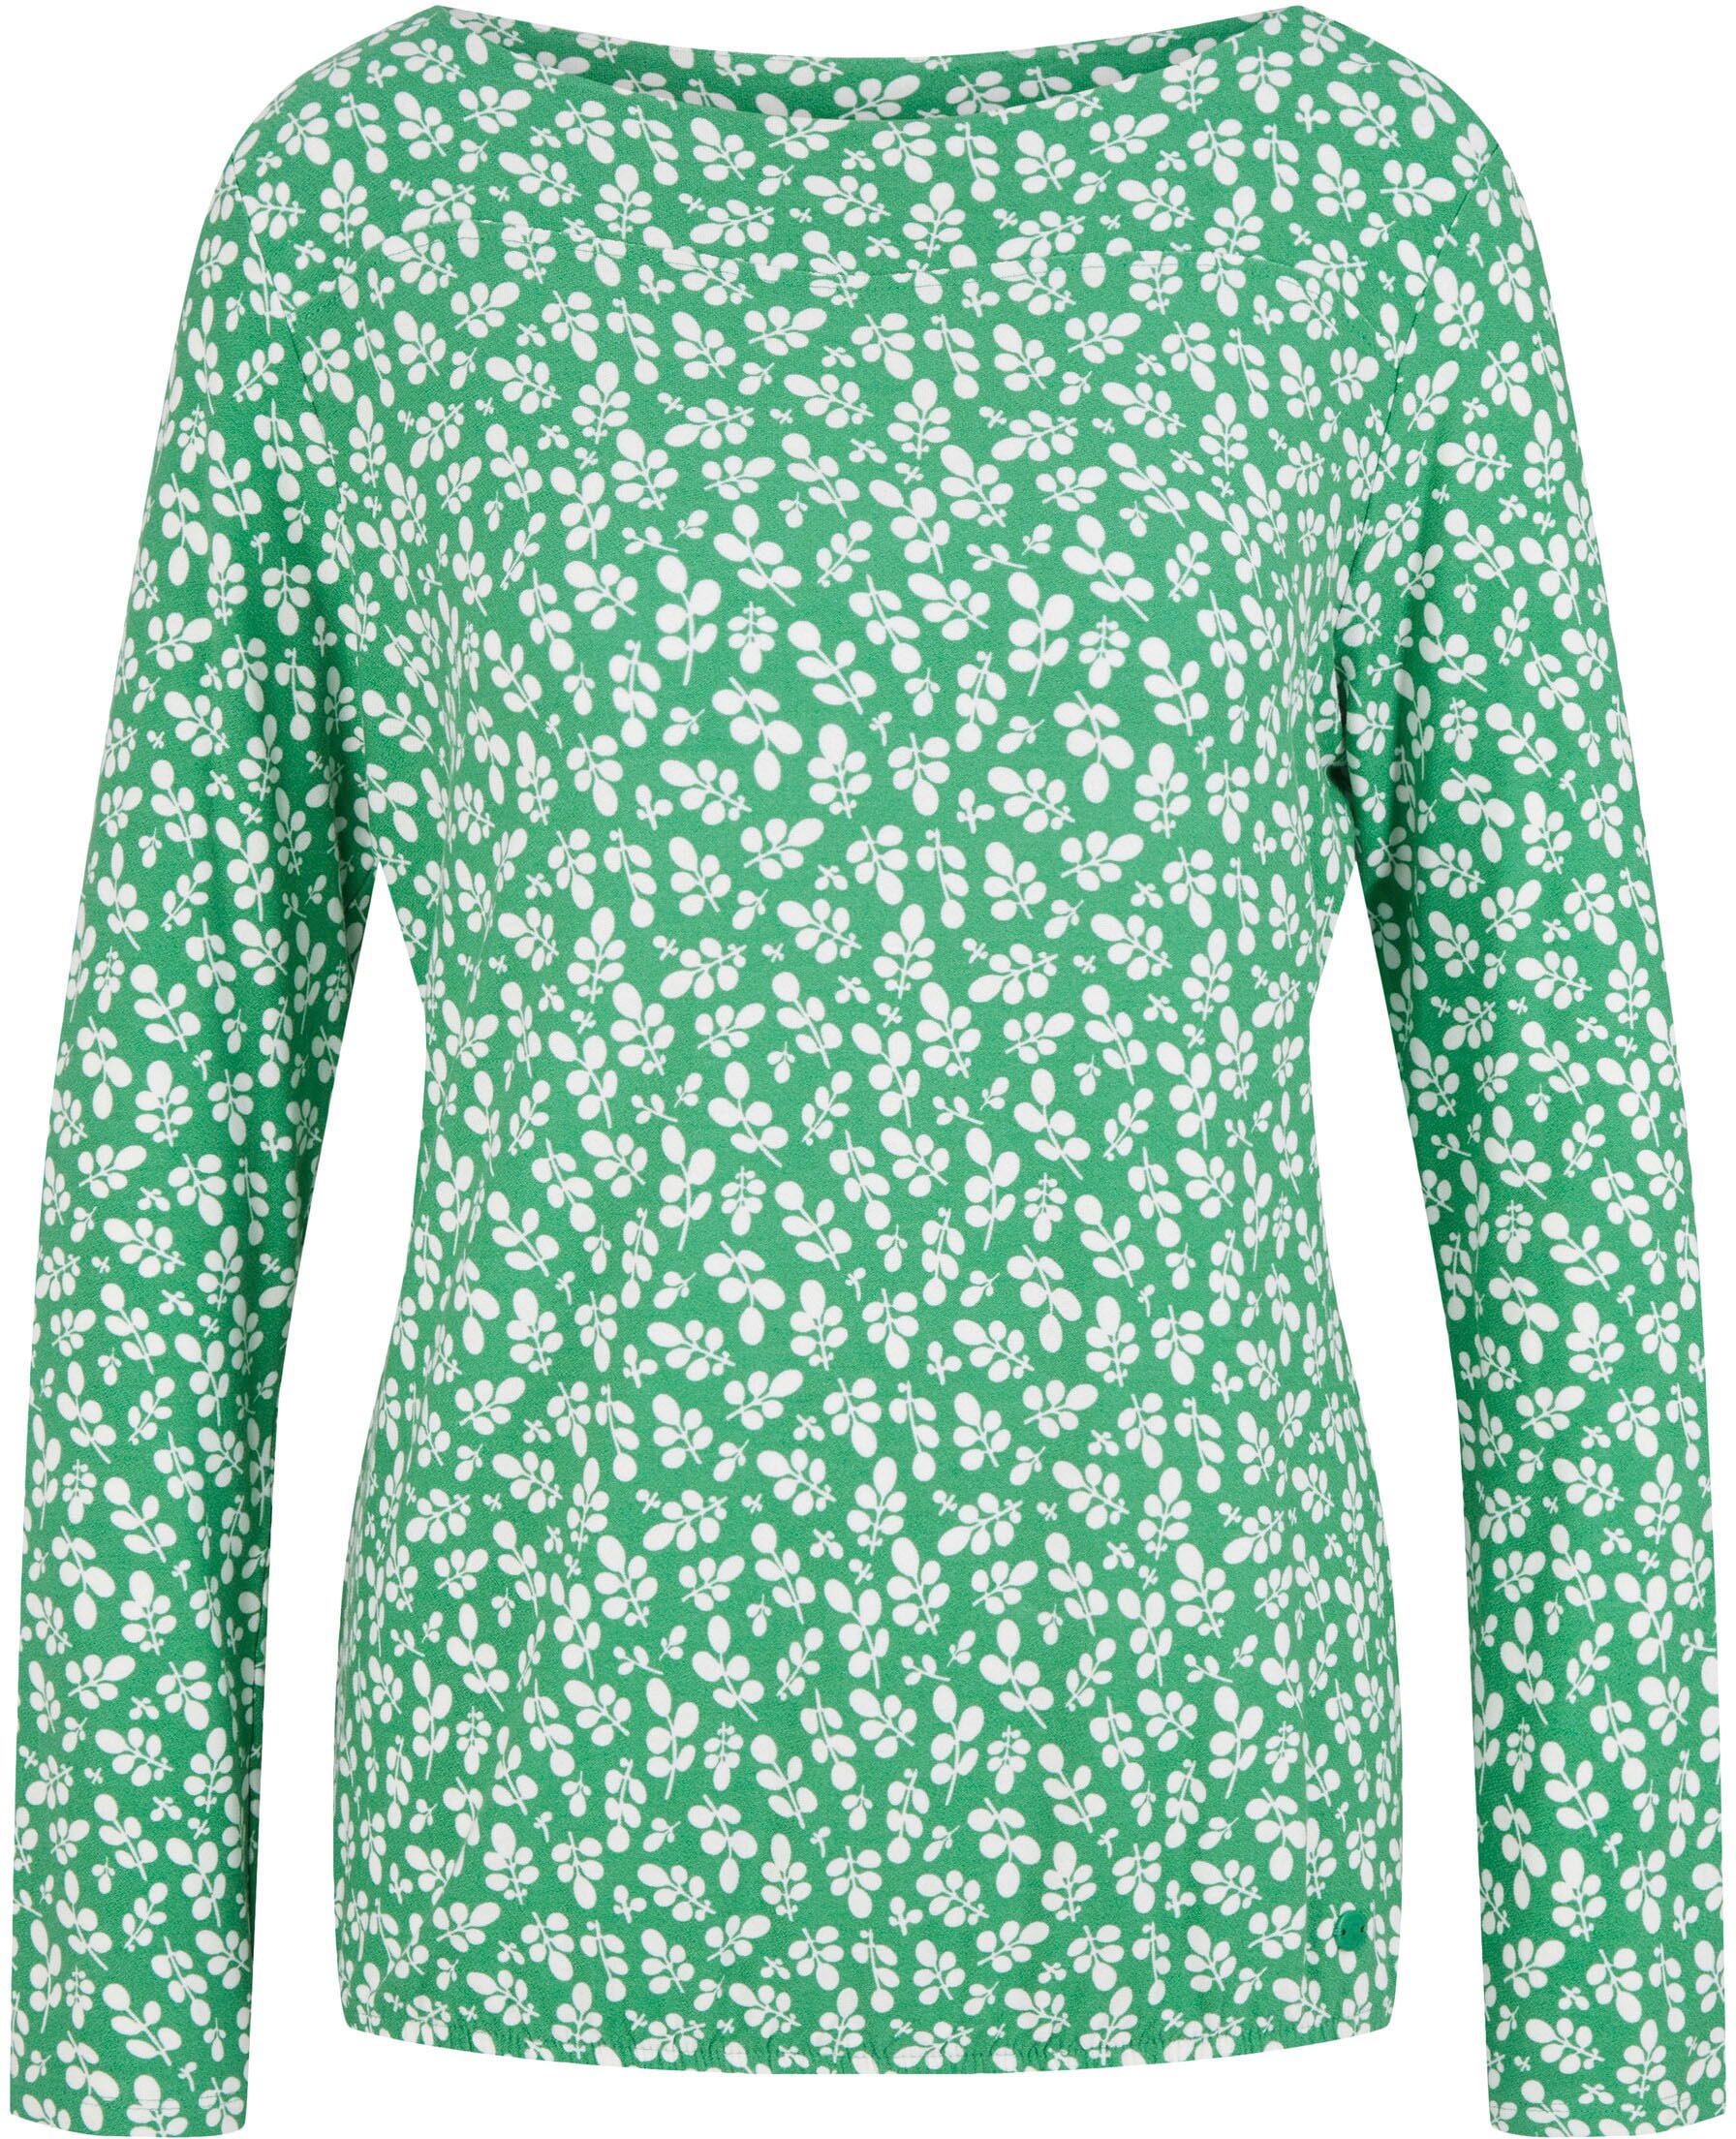 TOM TAILOR Print-Shirt »Tom Tailor Damen Print-Shirt«, im Floral-Design